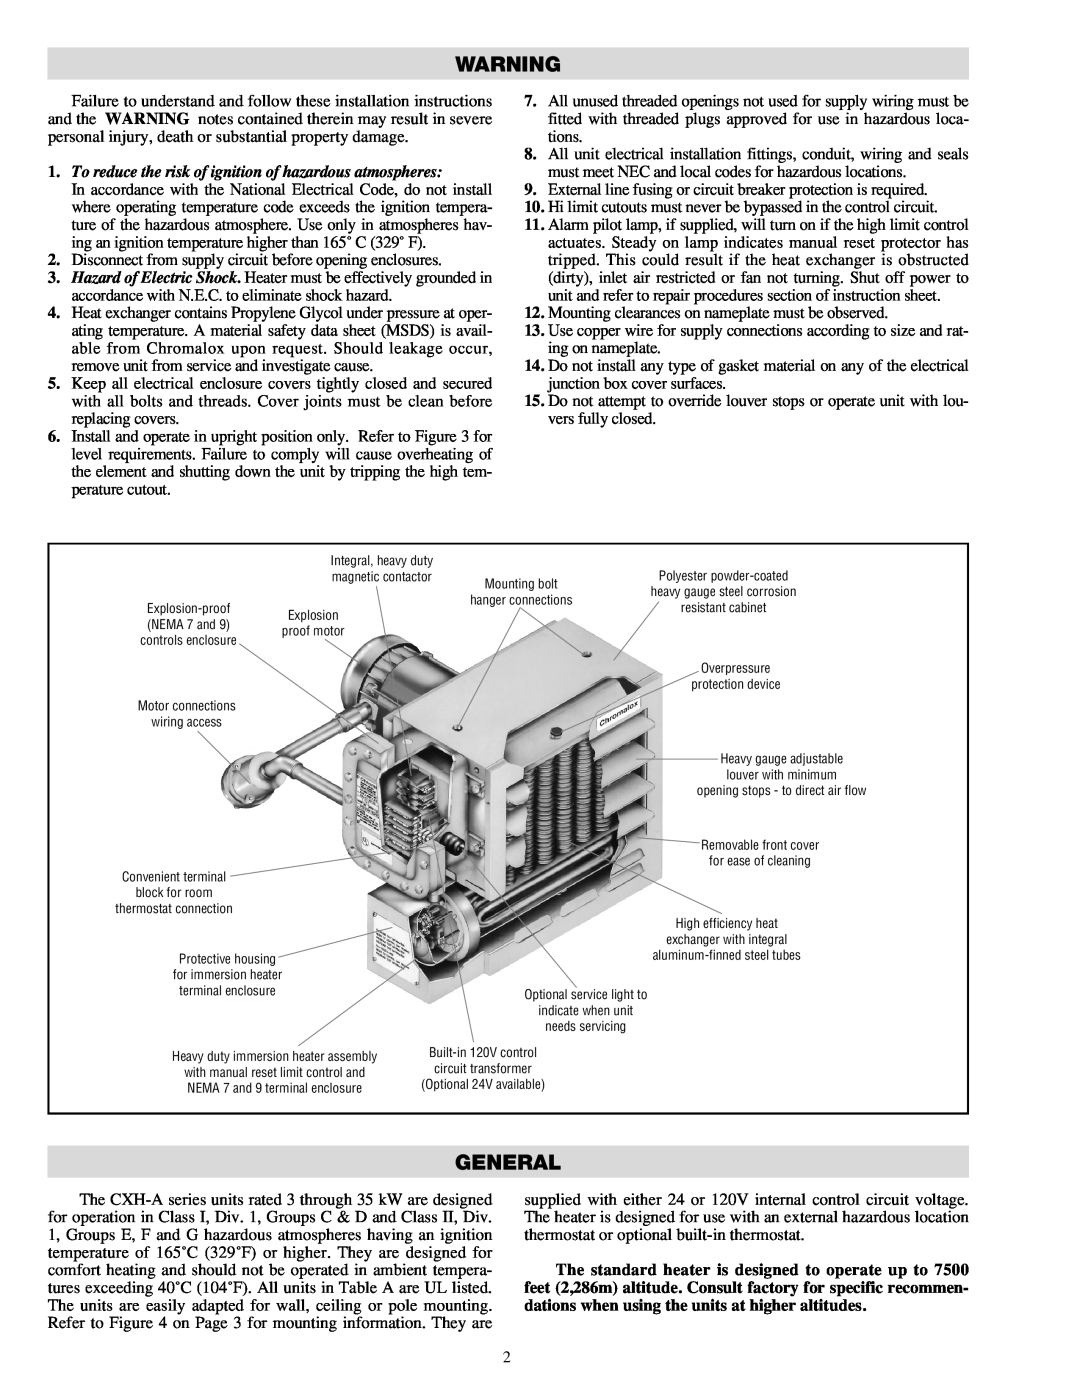 Chromalox PF490-5 installation instructions General 